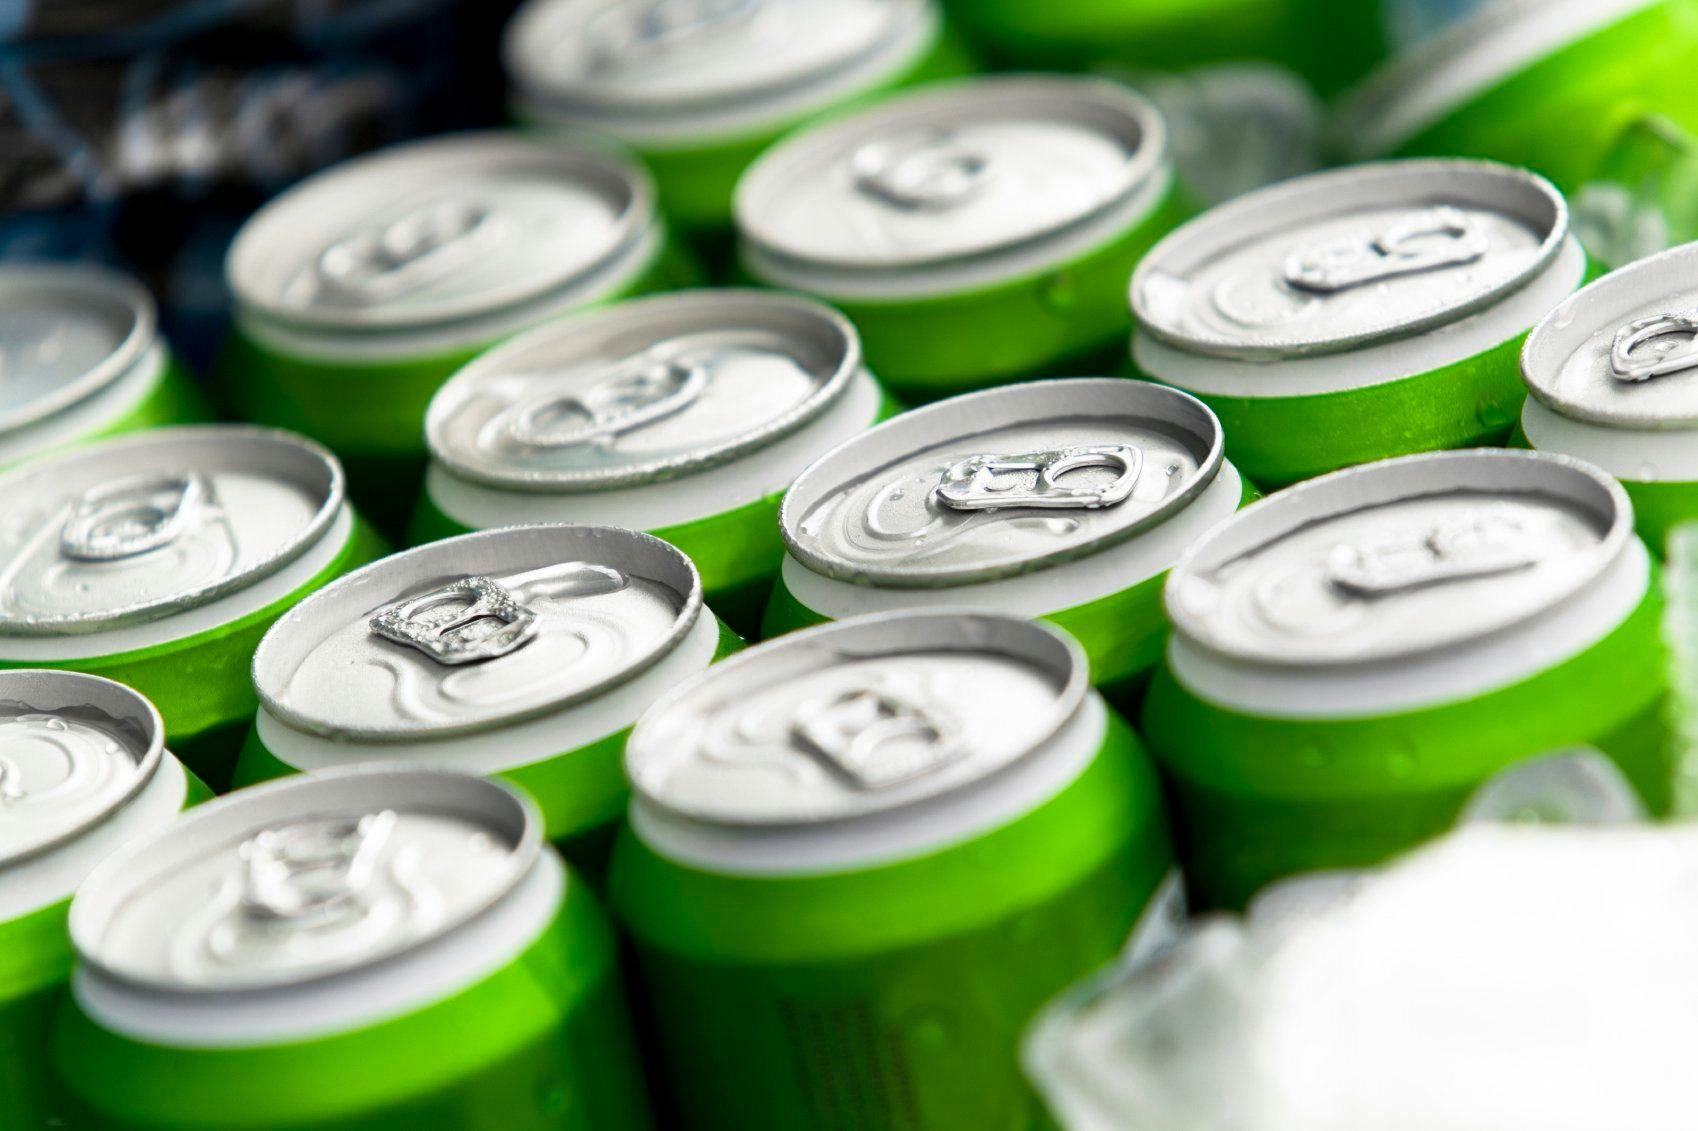 Older Millennials, Parents Consume More Energy Drinks, Despite Safety Concerns